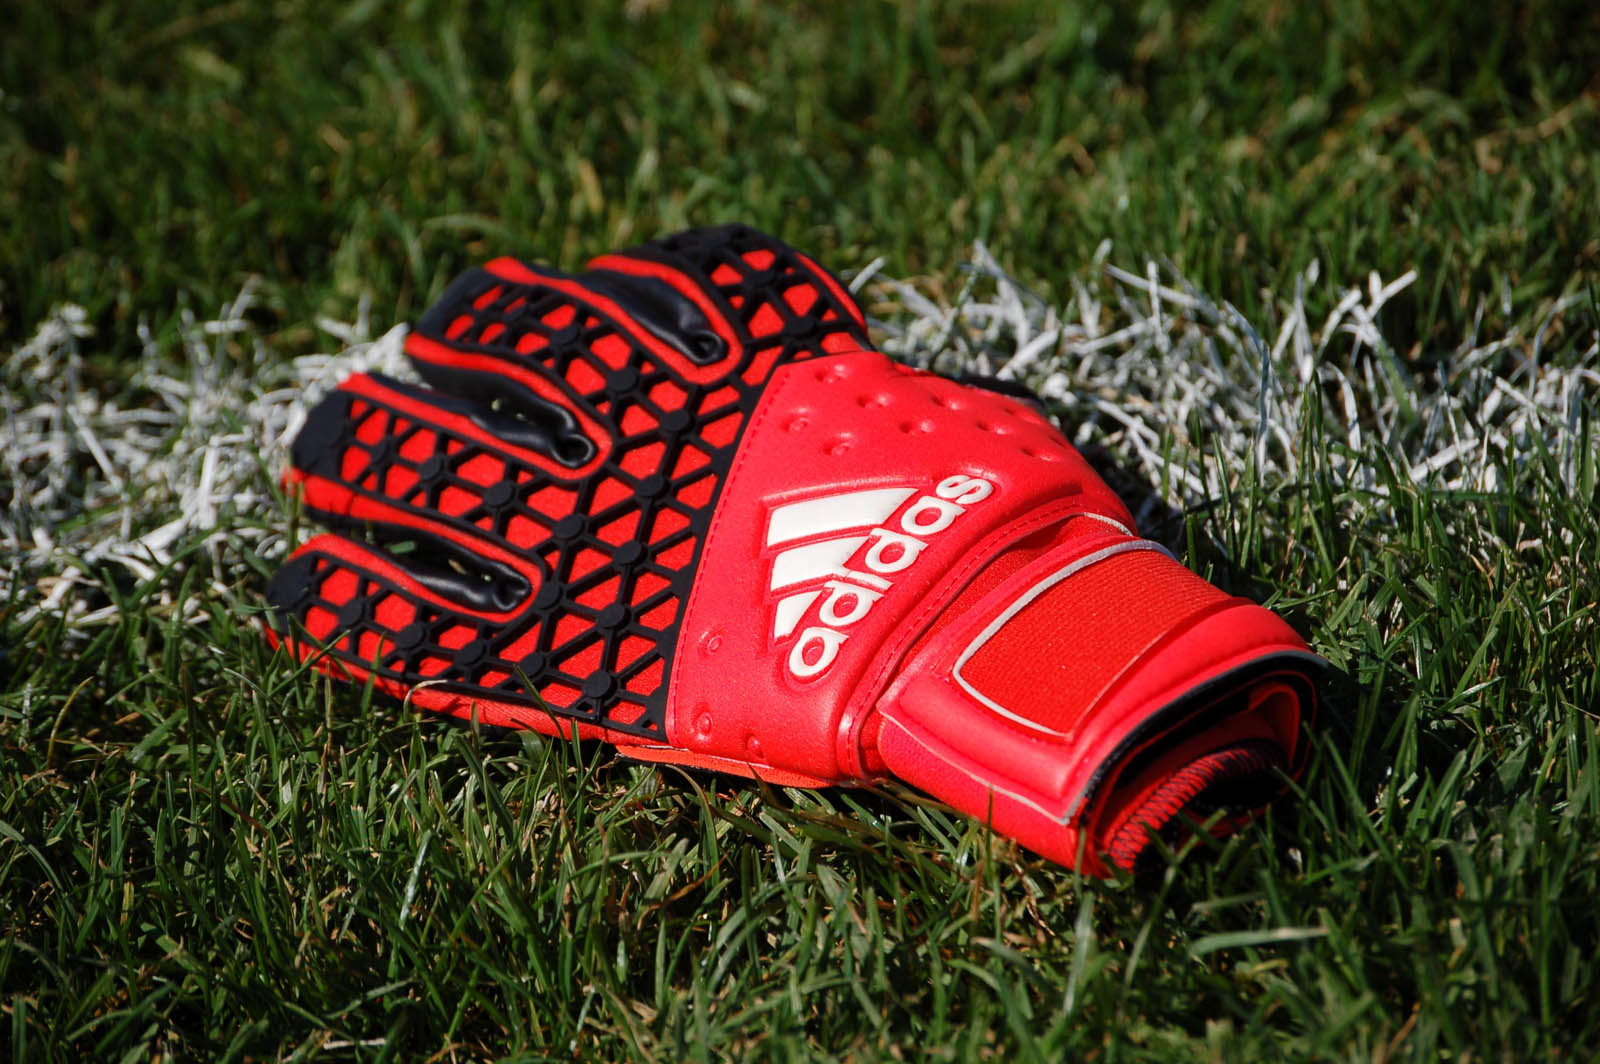 Red Adidas Ace 2015-2016 Goalkeeper Gloves Released - Footy Headlines